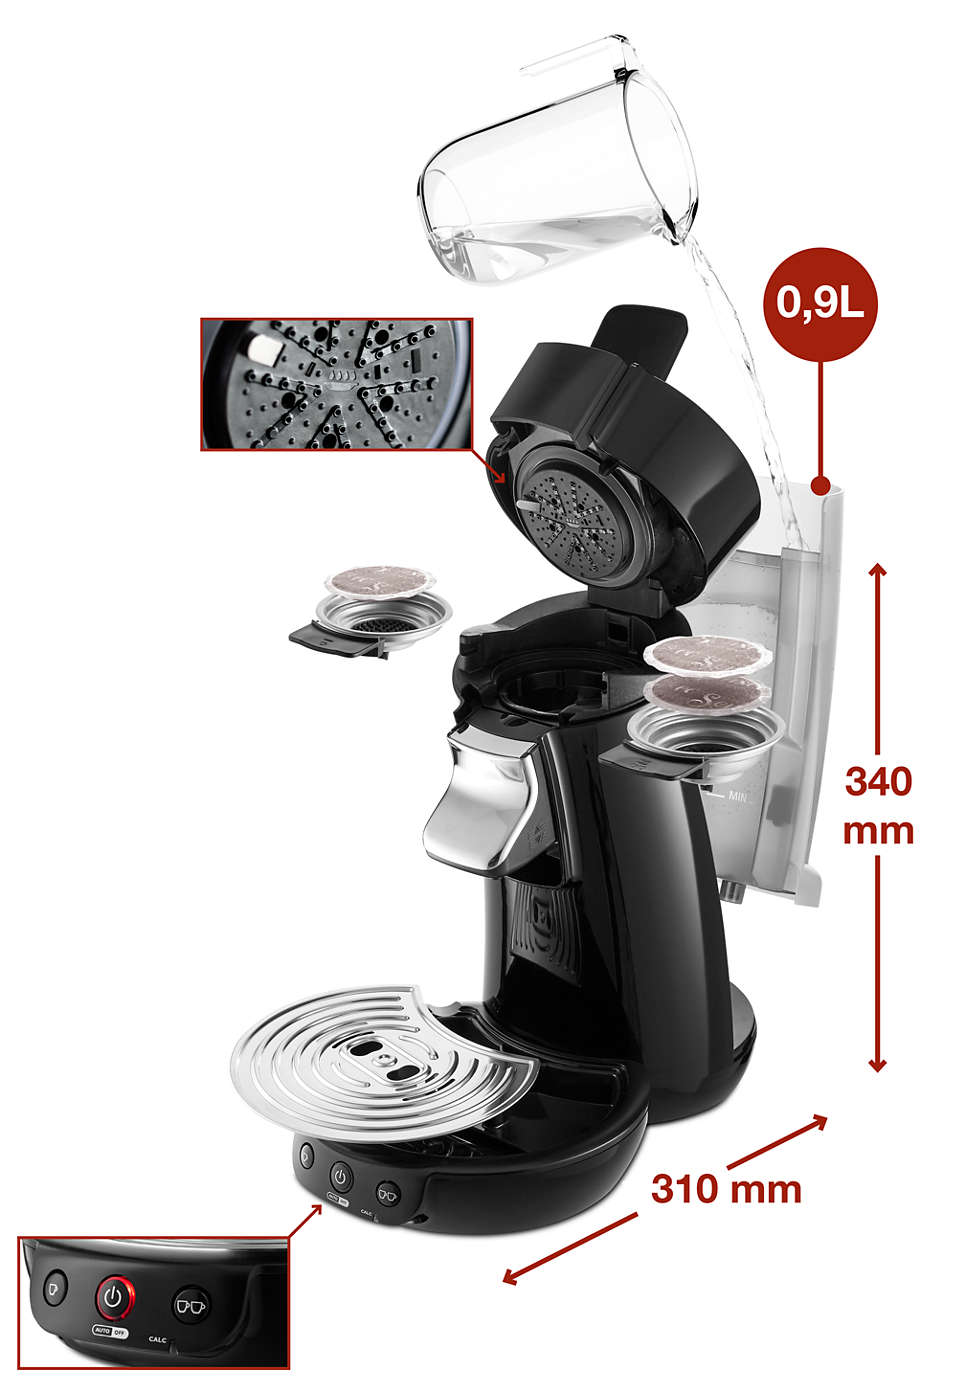 Senseo HD7829/60 Viva Café nera macchina per caffè con cialde tecnologia Kaffee Boost 